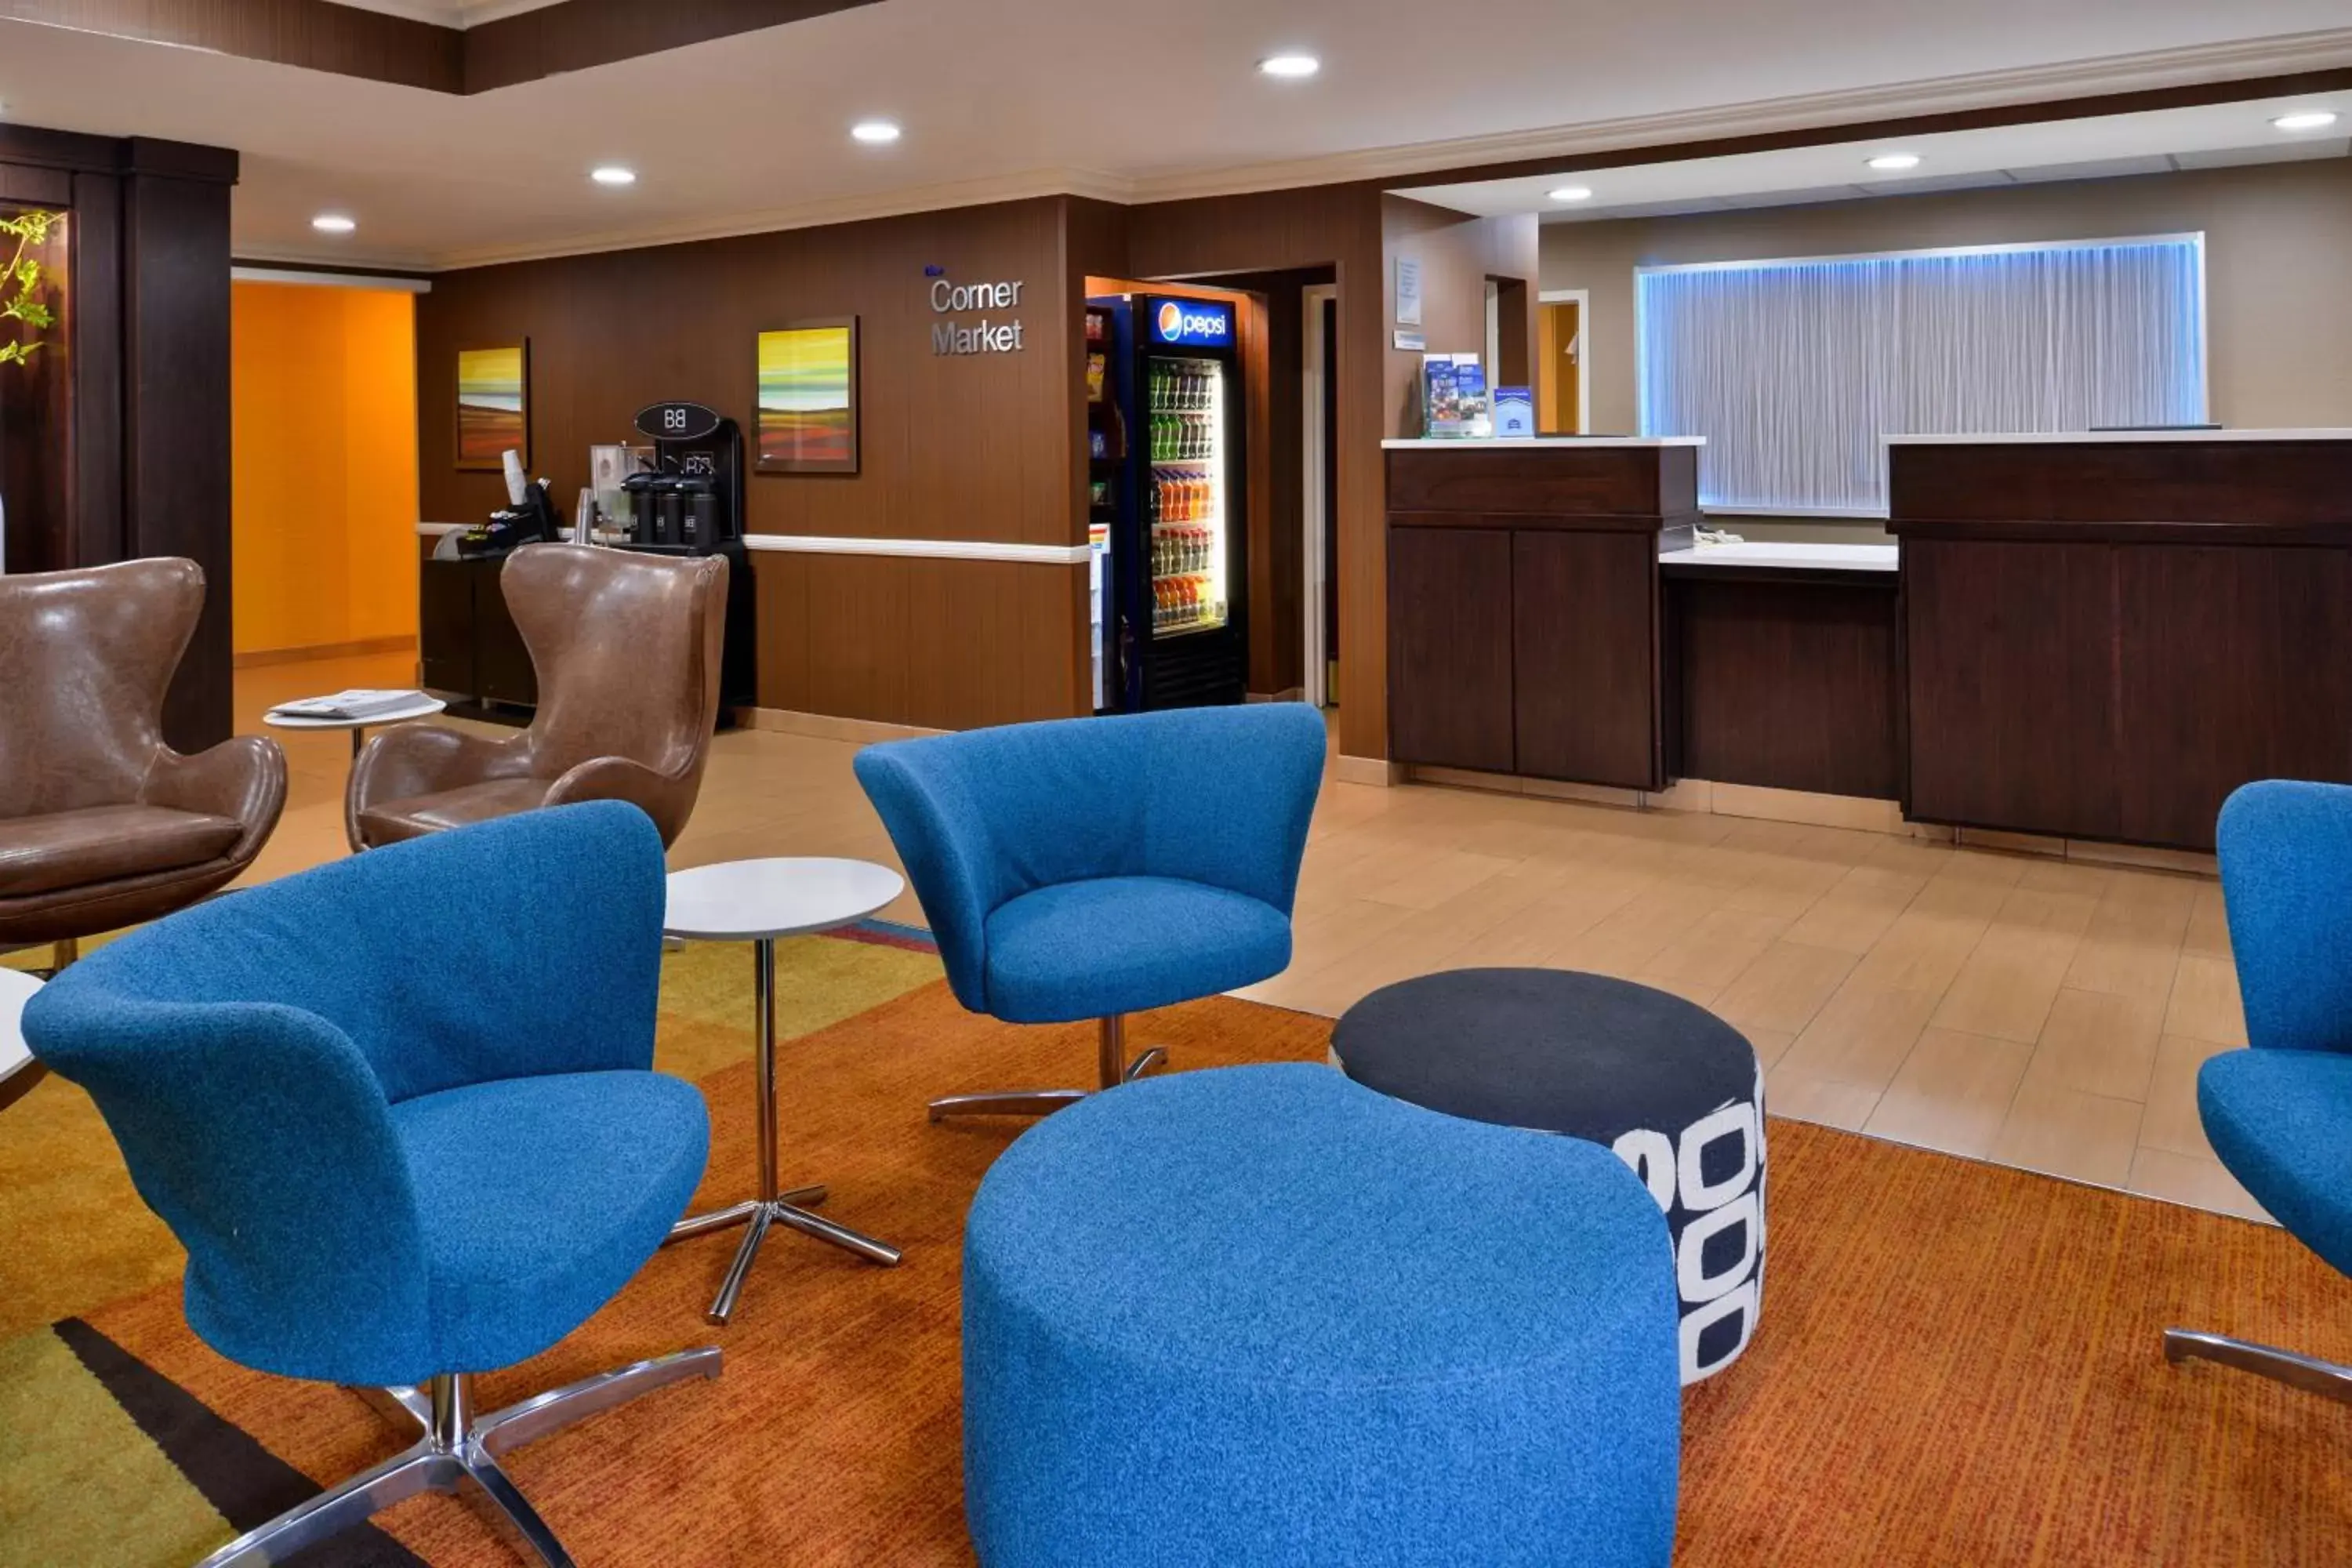 Lobby or reception, Lobby/Reception in Fairfield Inn & Suites Hattiesburg / University